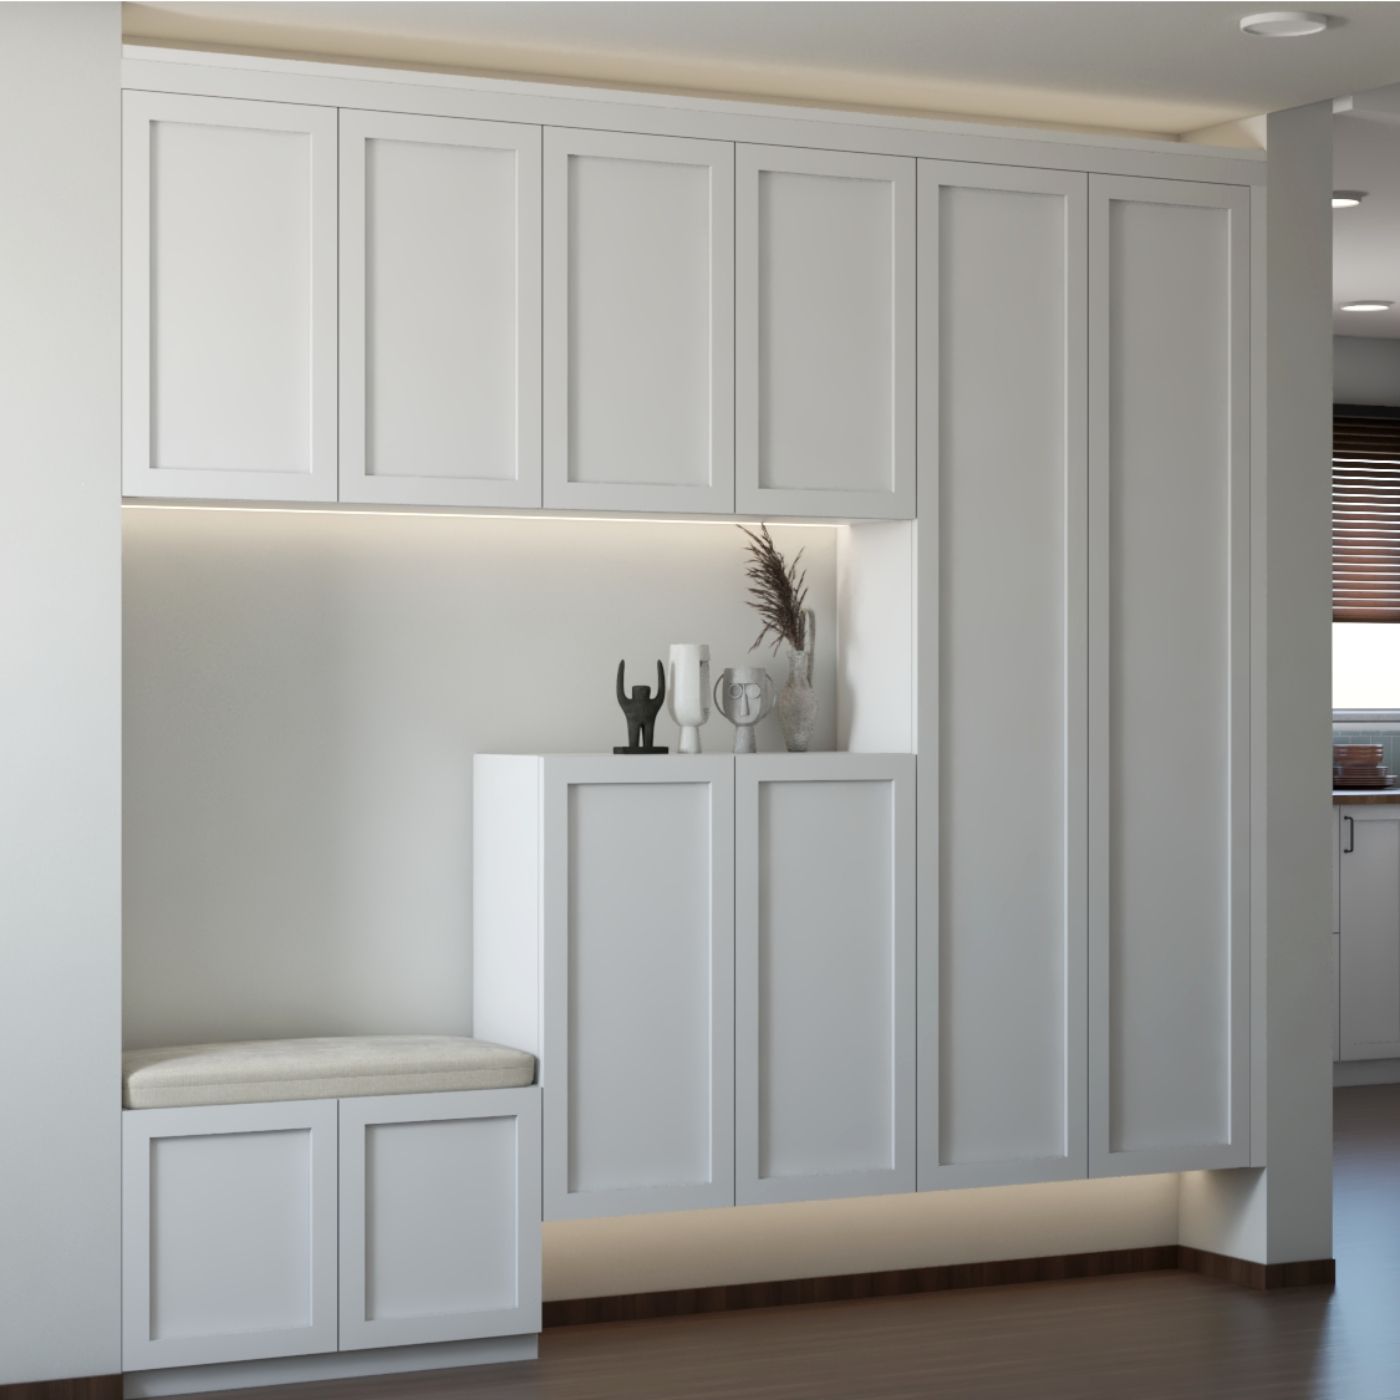 Minimal White Laminate Design For Storage Cabinets